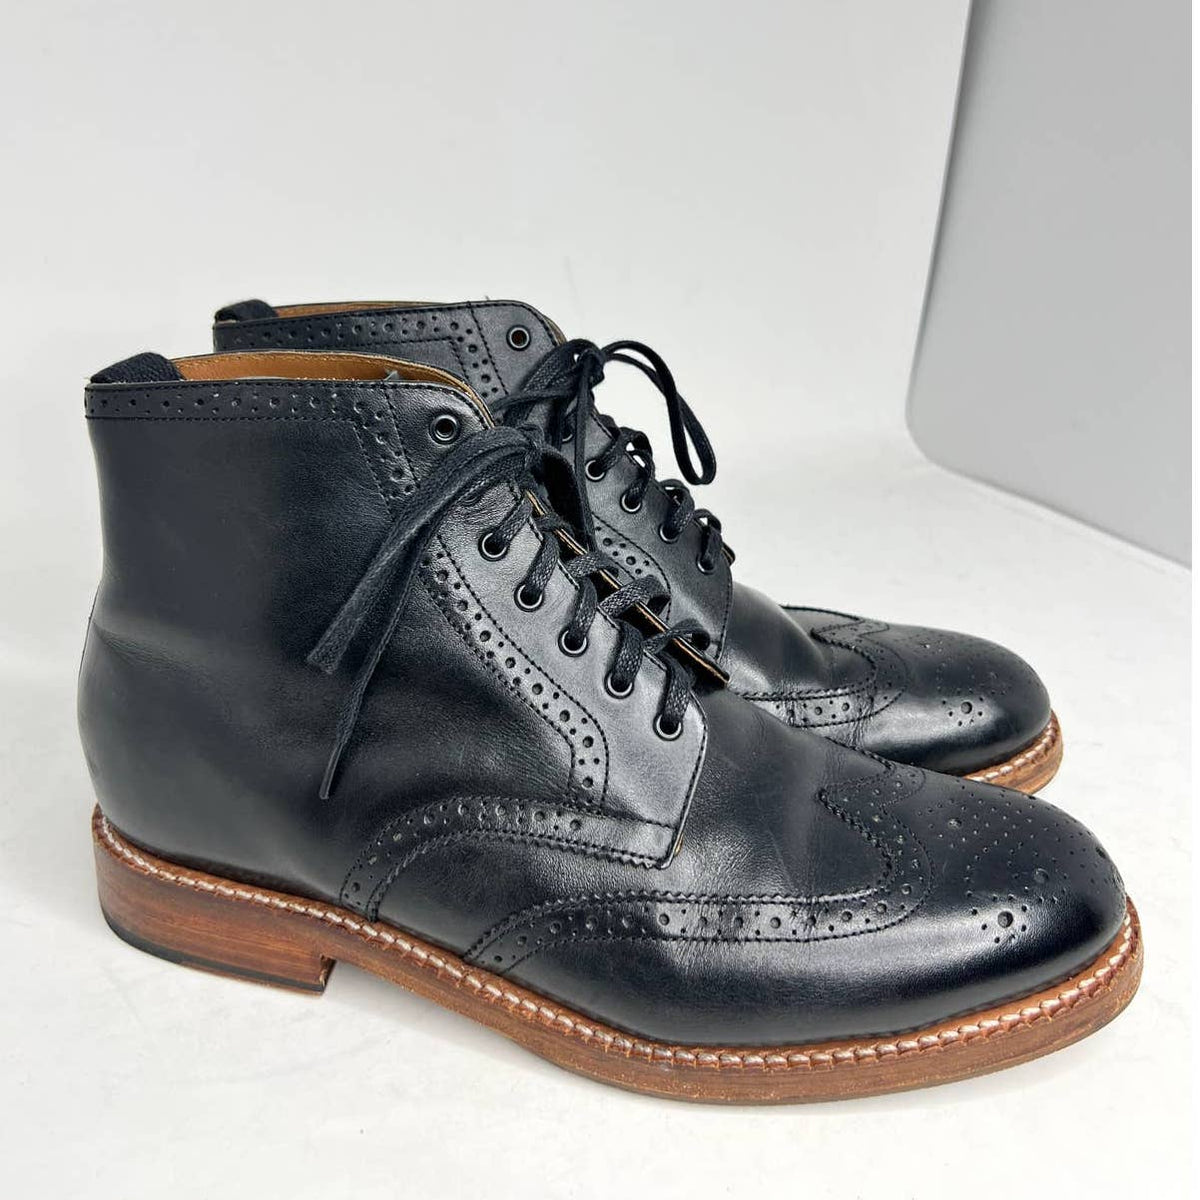 Grenson Black Leather Oxford Boots Sz.8.5